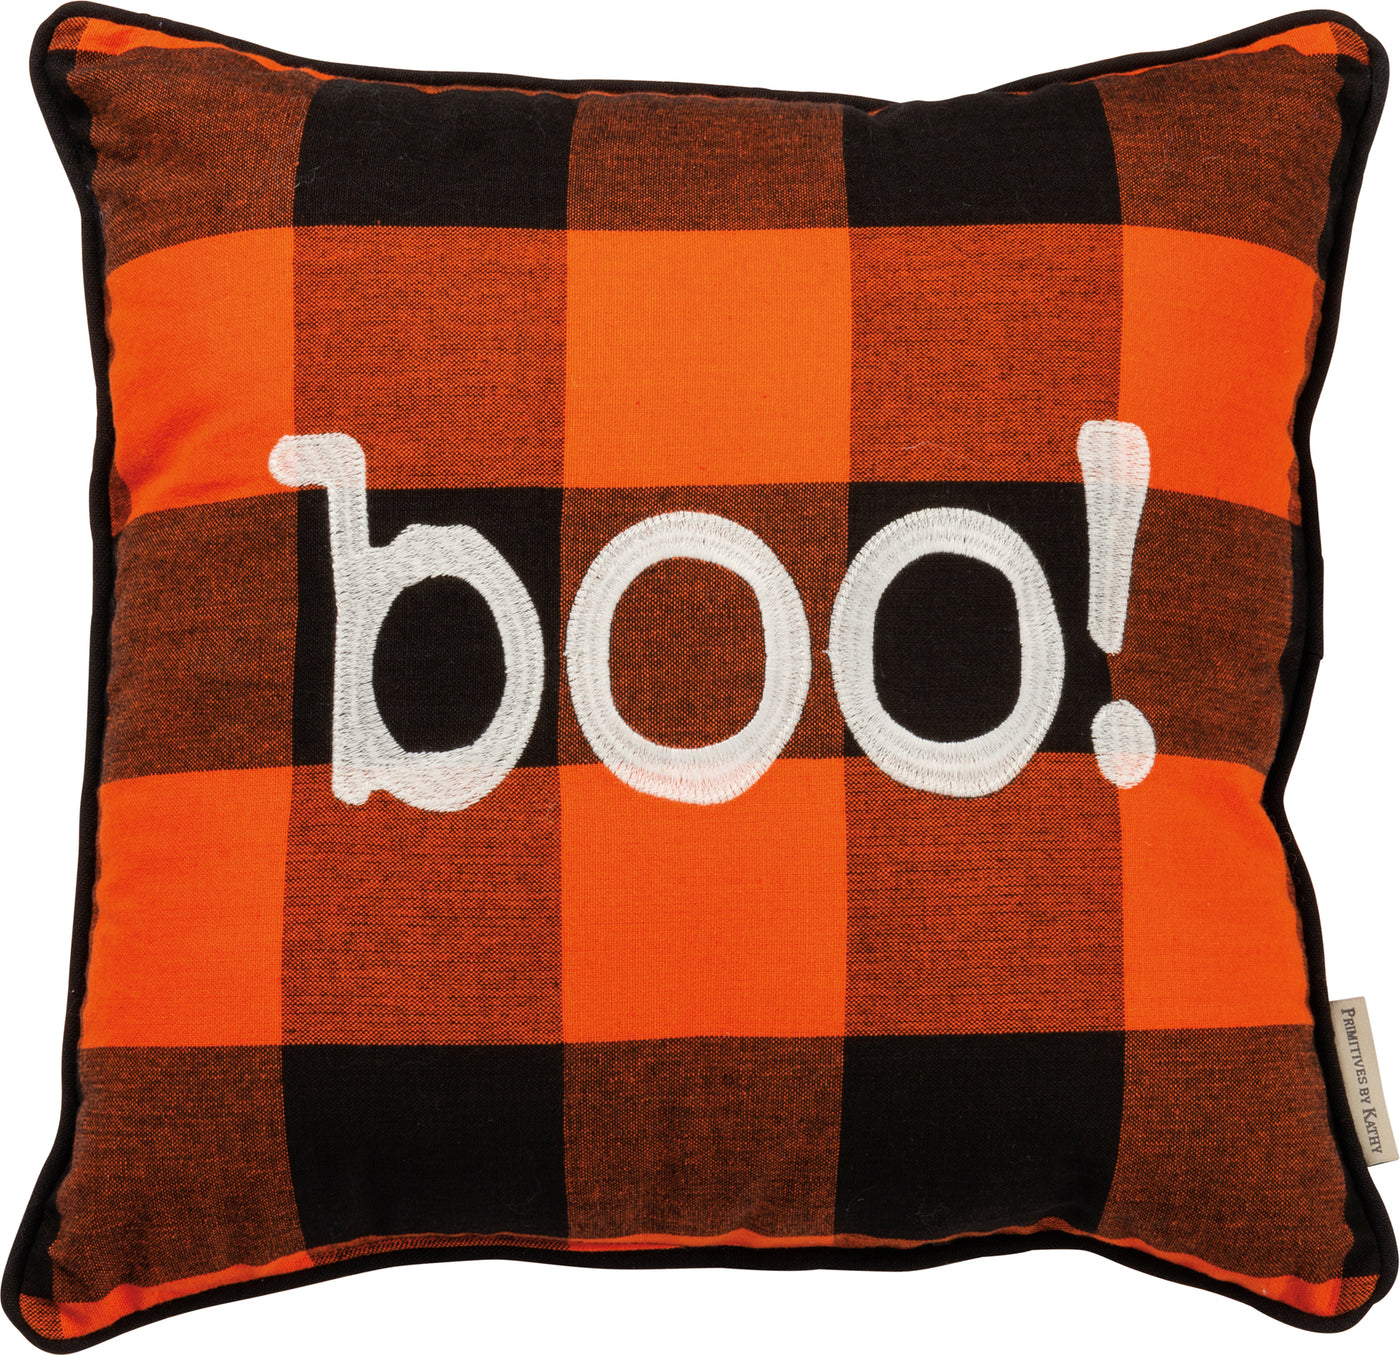 Boo! Orange and Black Buffalo Plaid Pillow